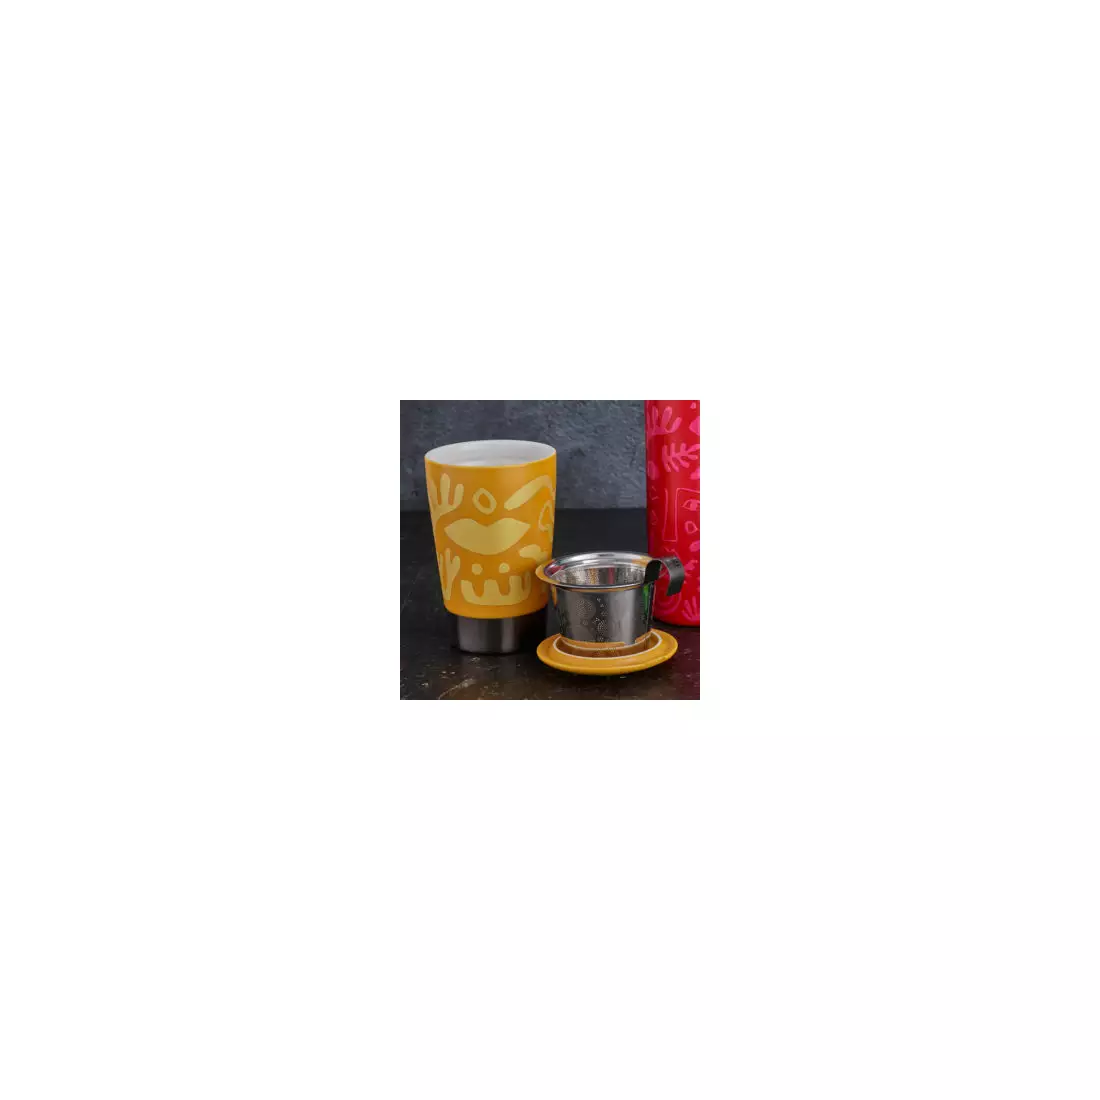 EIGENART TEAEVE Thermobecher, Porzellan 350 ml, opera yellow